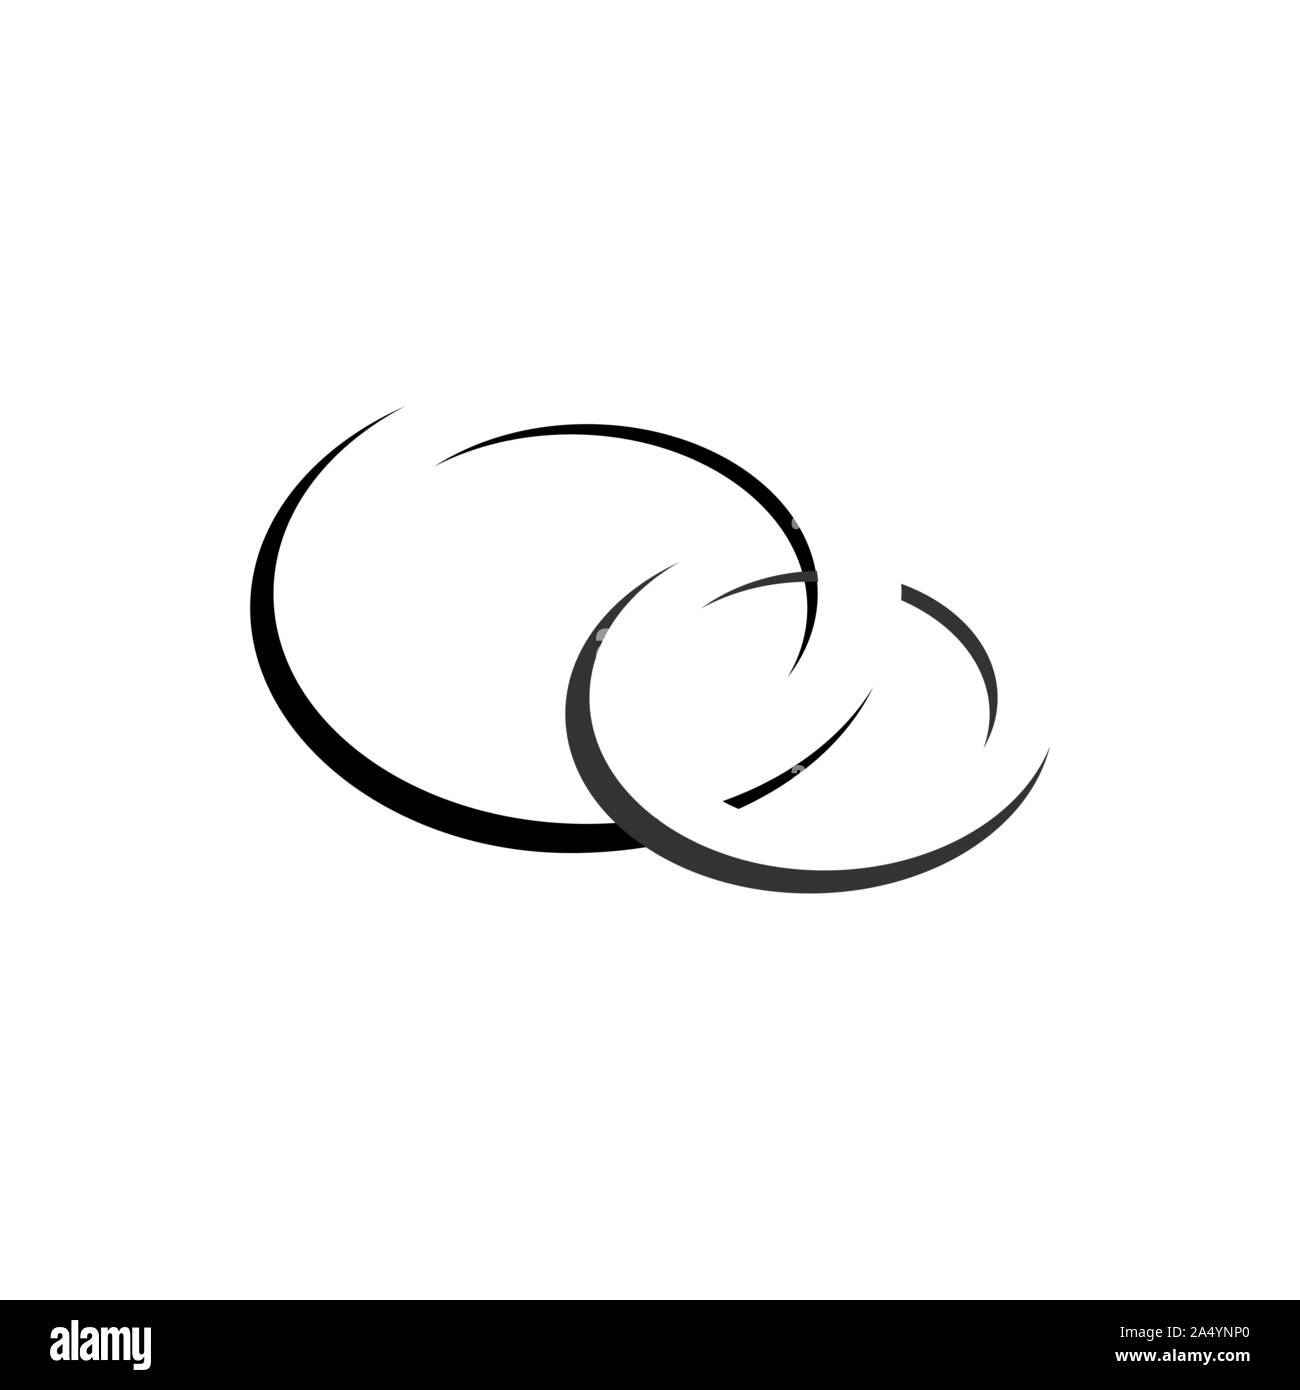 concept of infinity logo design vector illustrations Stock Vector